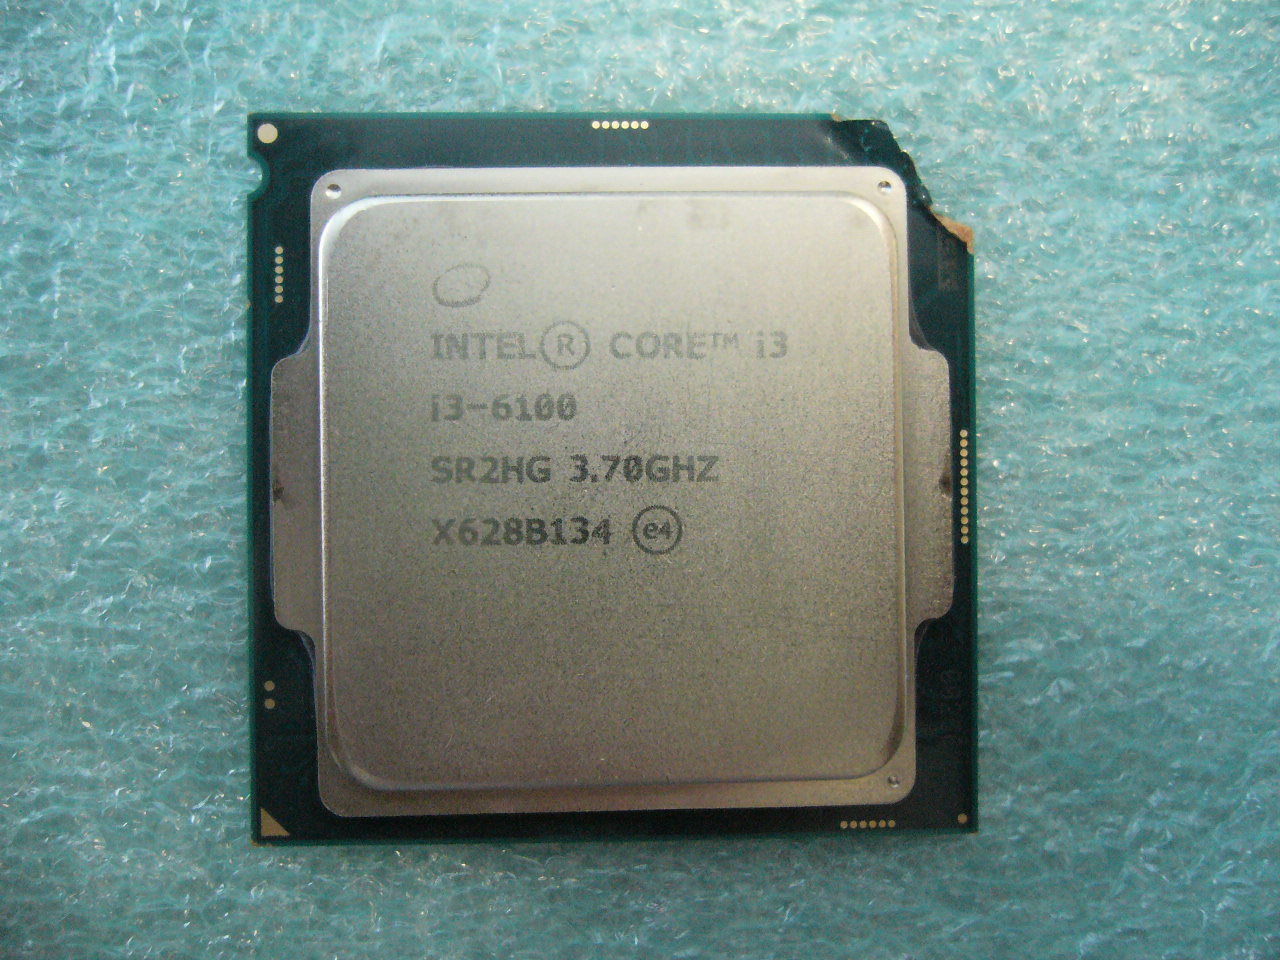 QTY 1x Intel CPU i3-6100 Dual-Cores 3.7Ghz LGA1151 SR2HG NOT WORKING broken - Click Image to Close